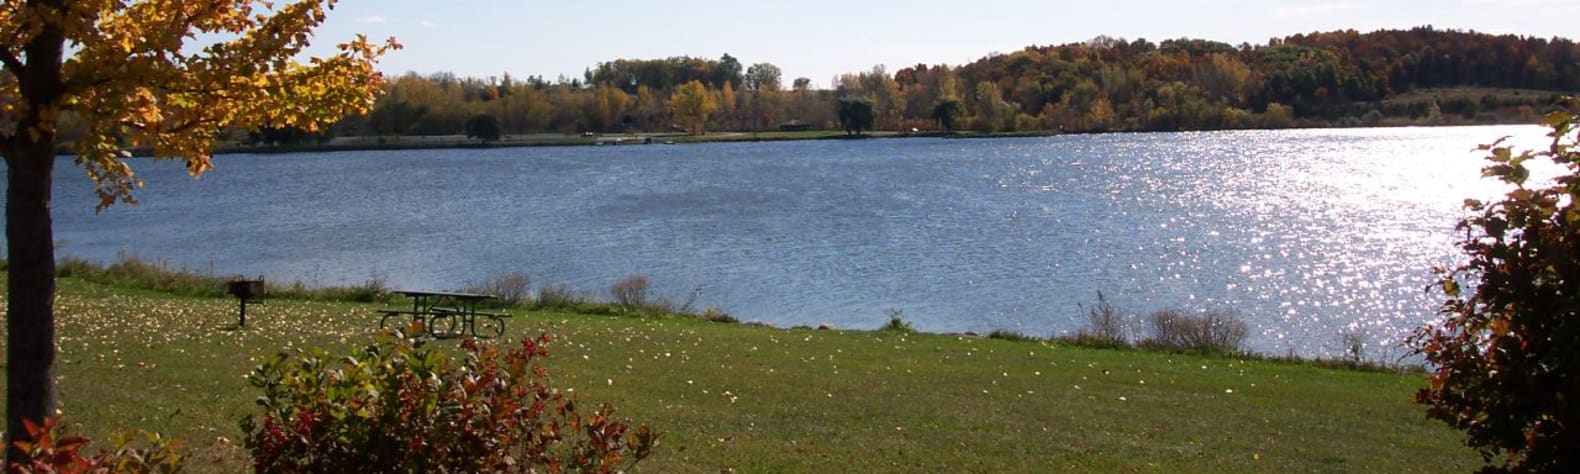 Pleasant Creek State Recreation Area